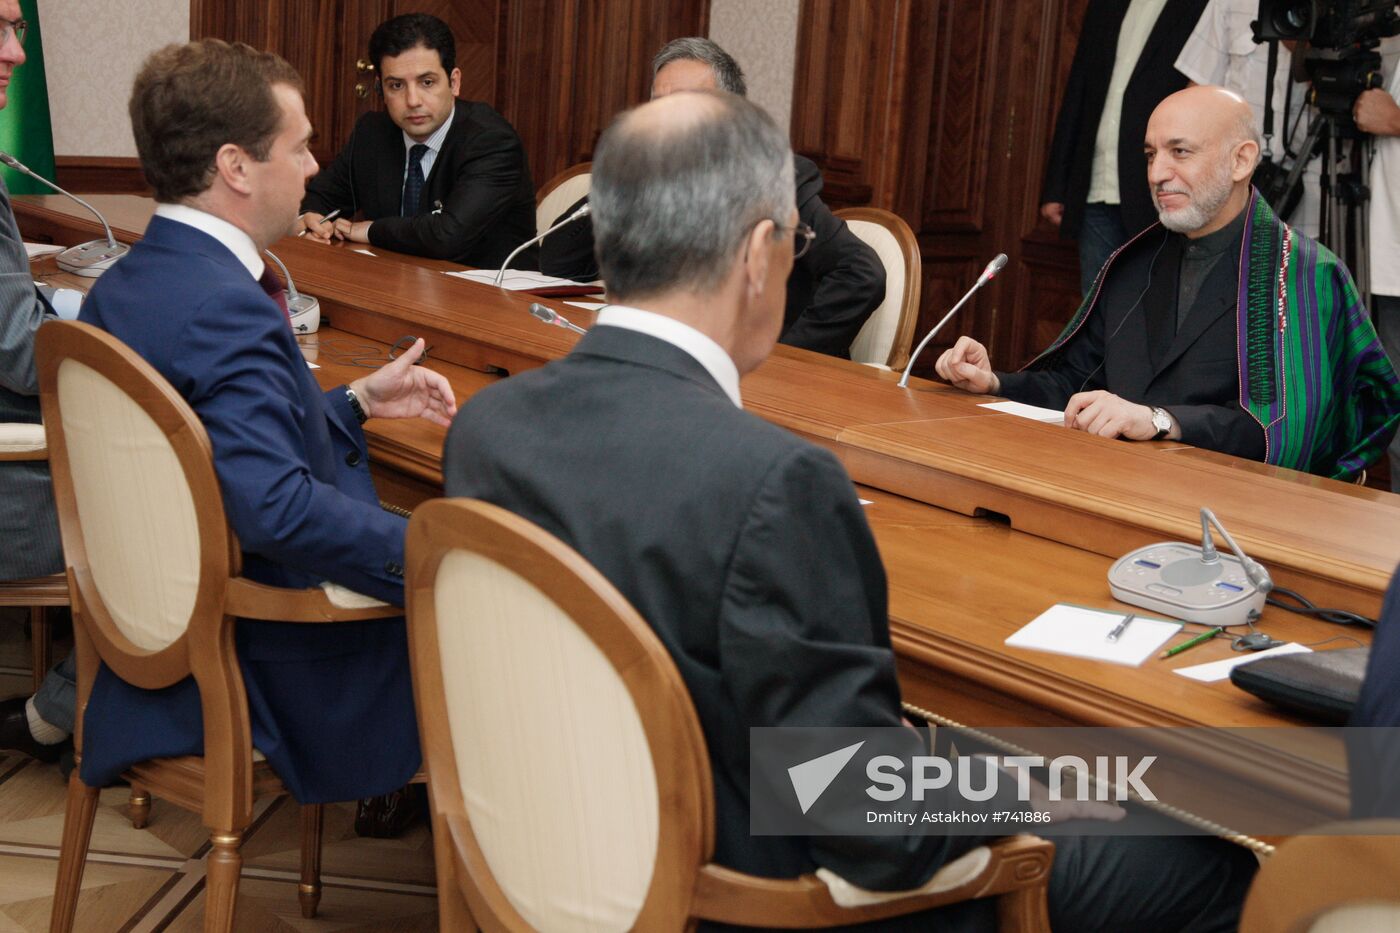 Russian President Medvedev meets Hamid Karzai